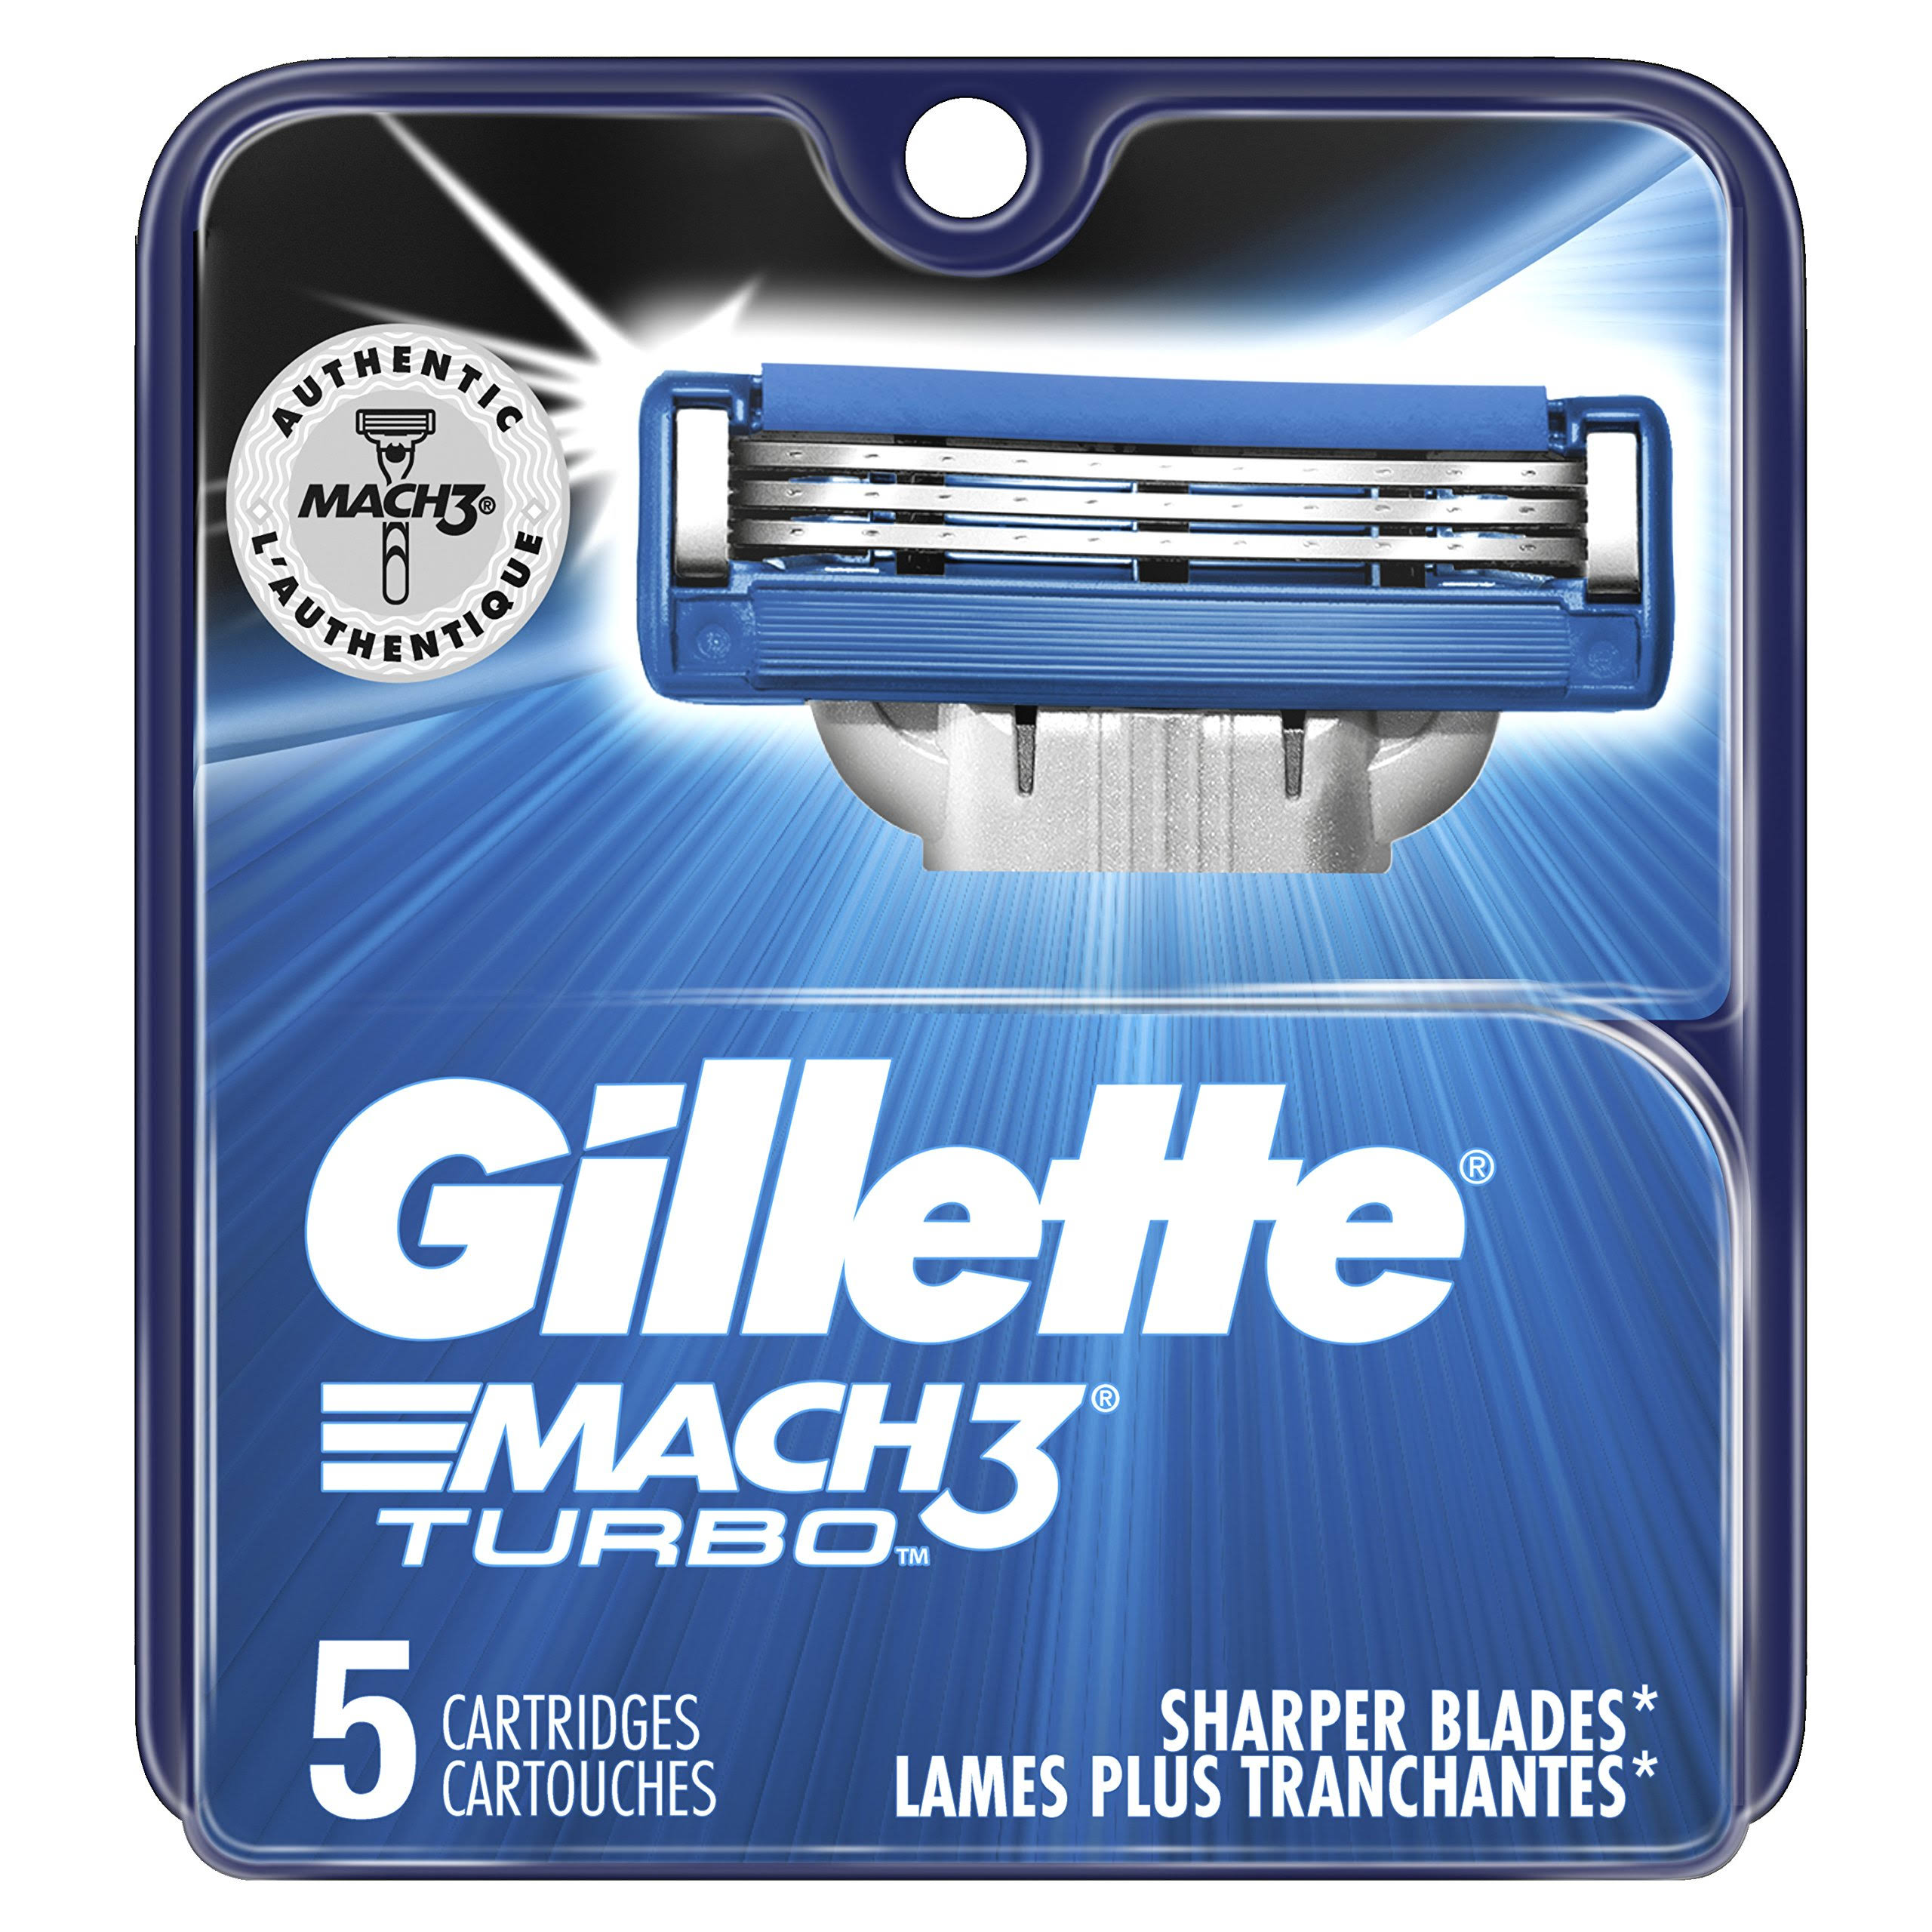 Gillette Mach 3 Turbo Cartridges - 5 Pack